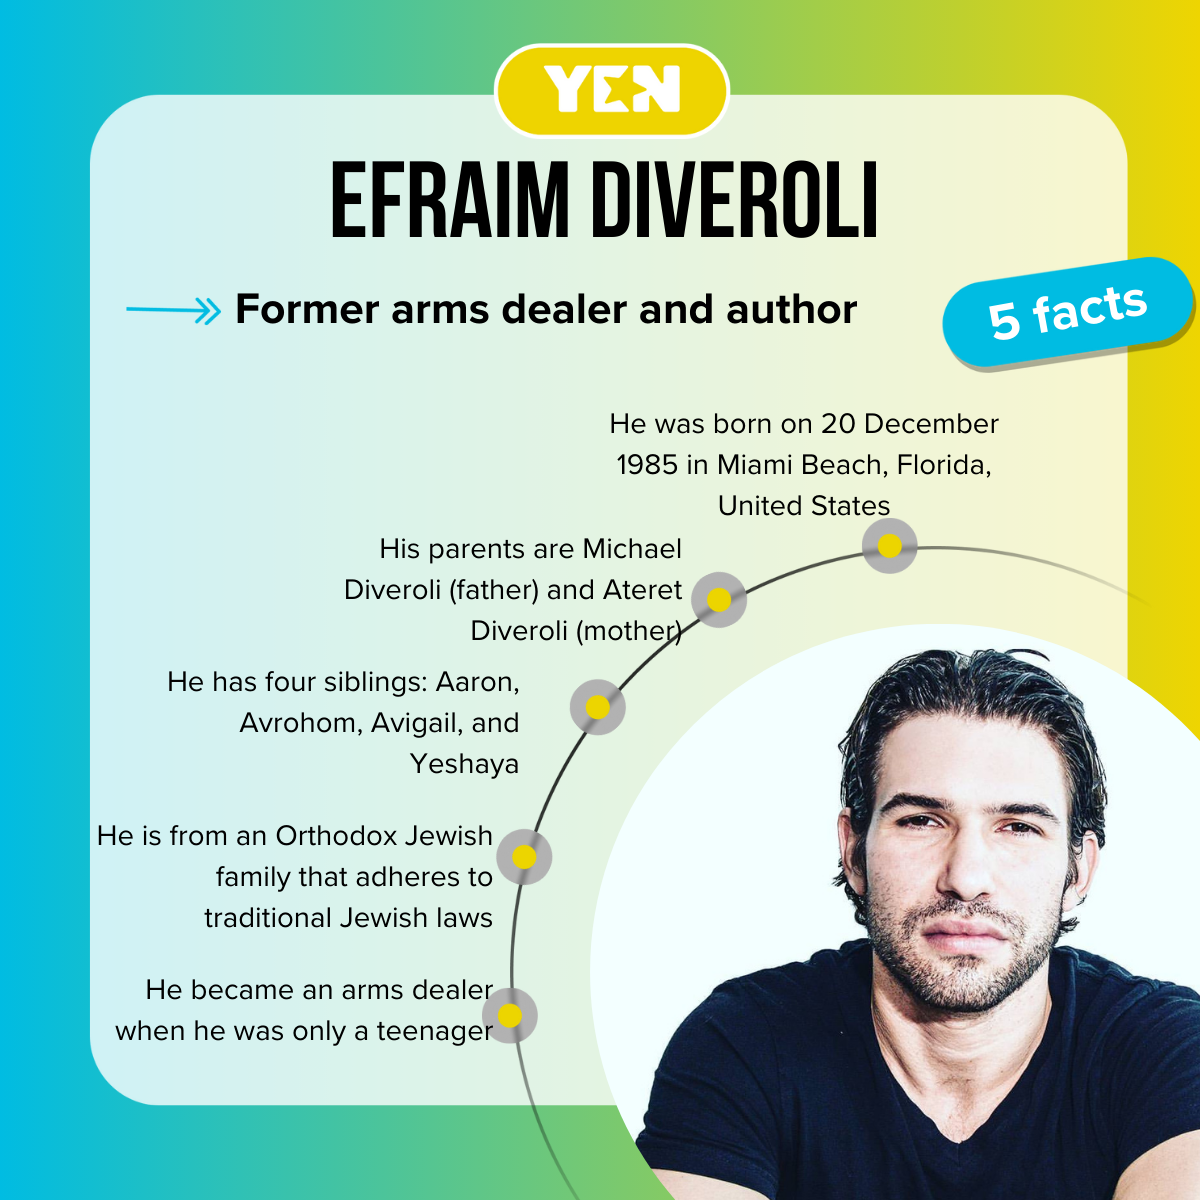 Top 5 facts about Efraim Diveroli